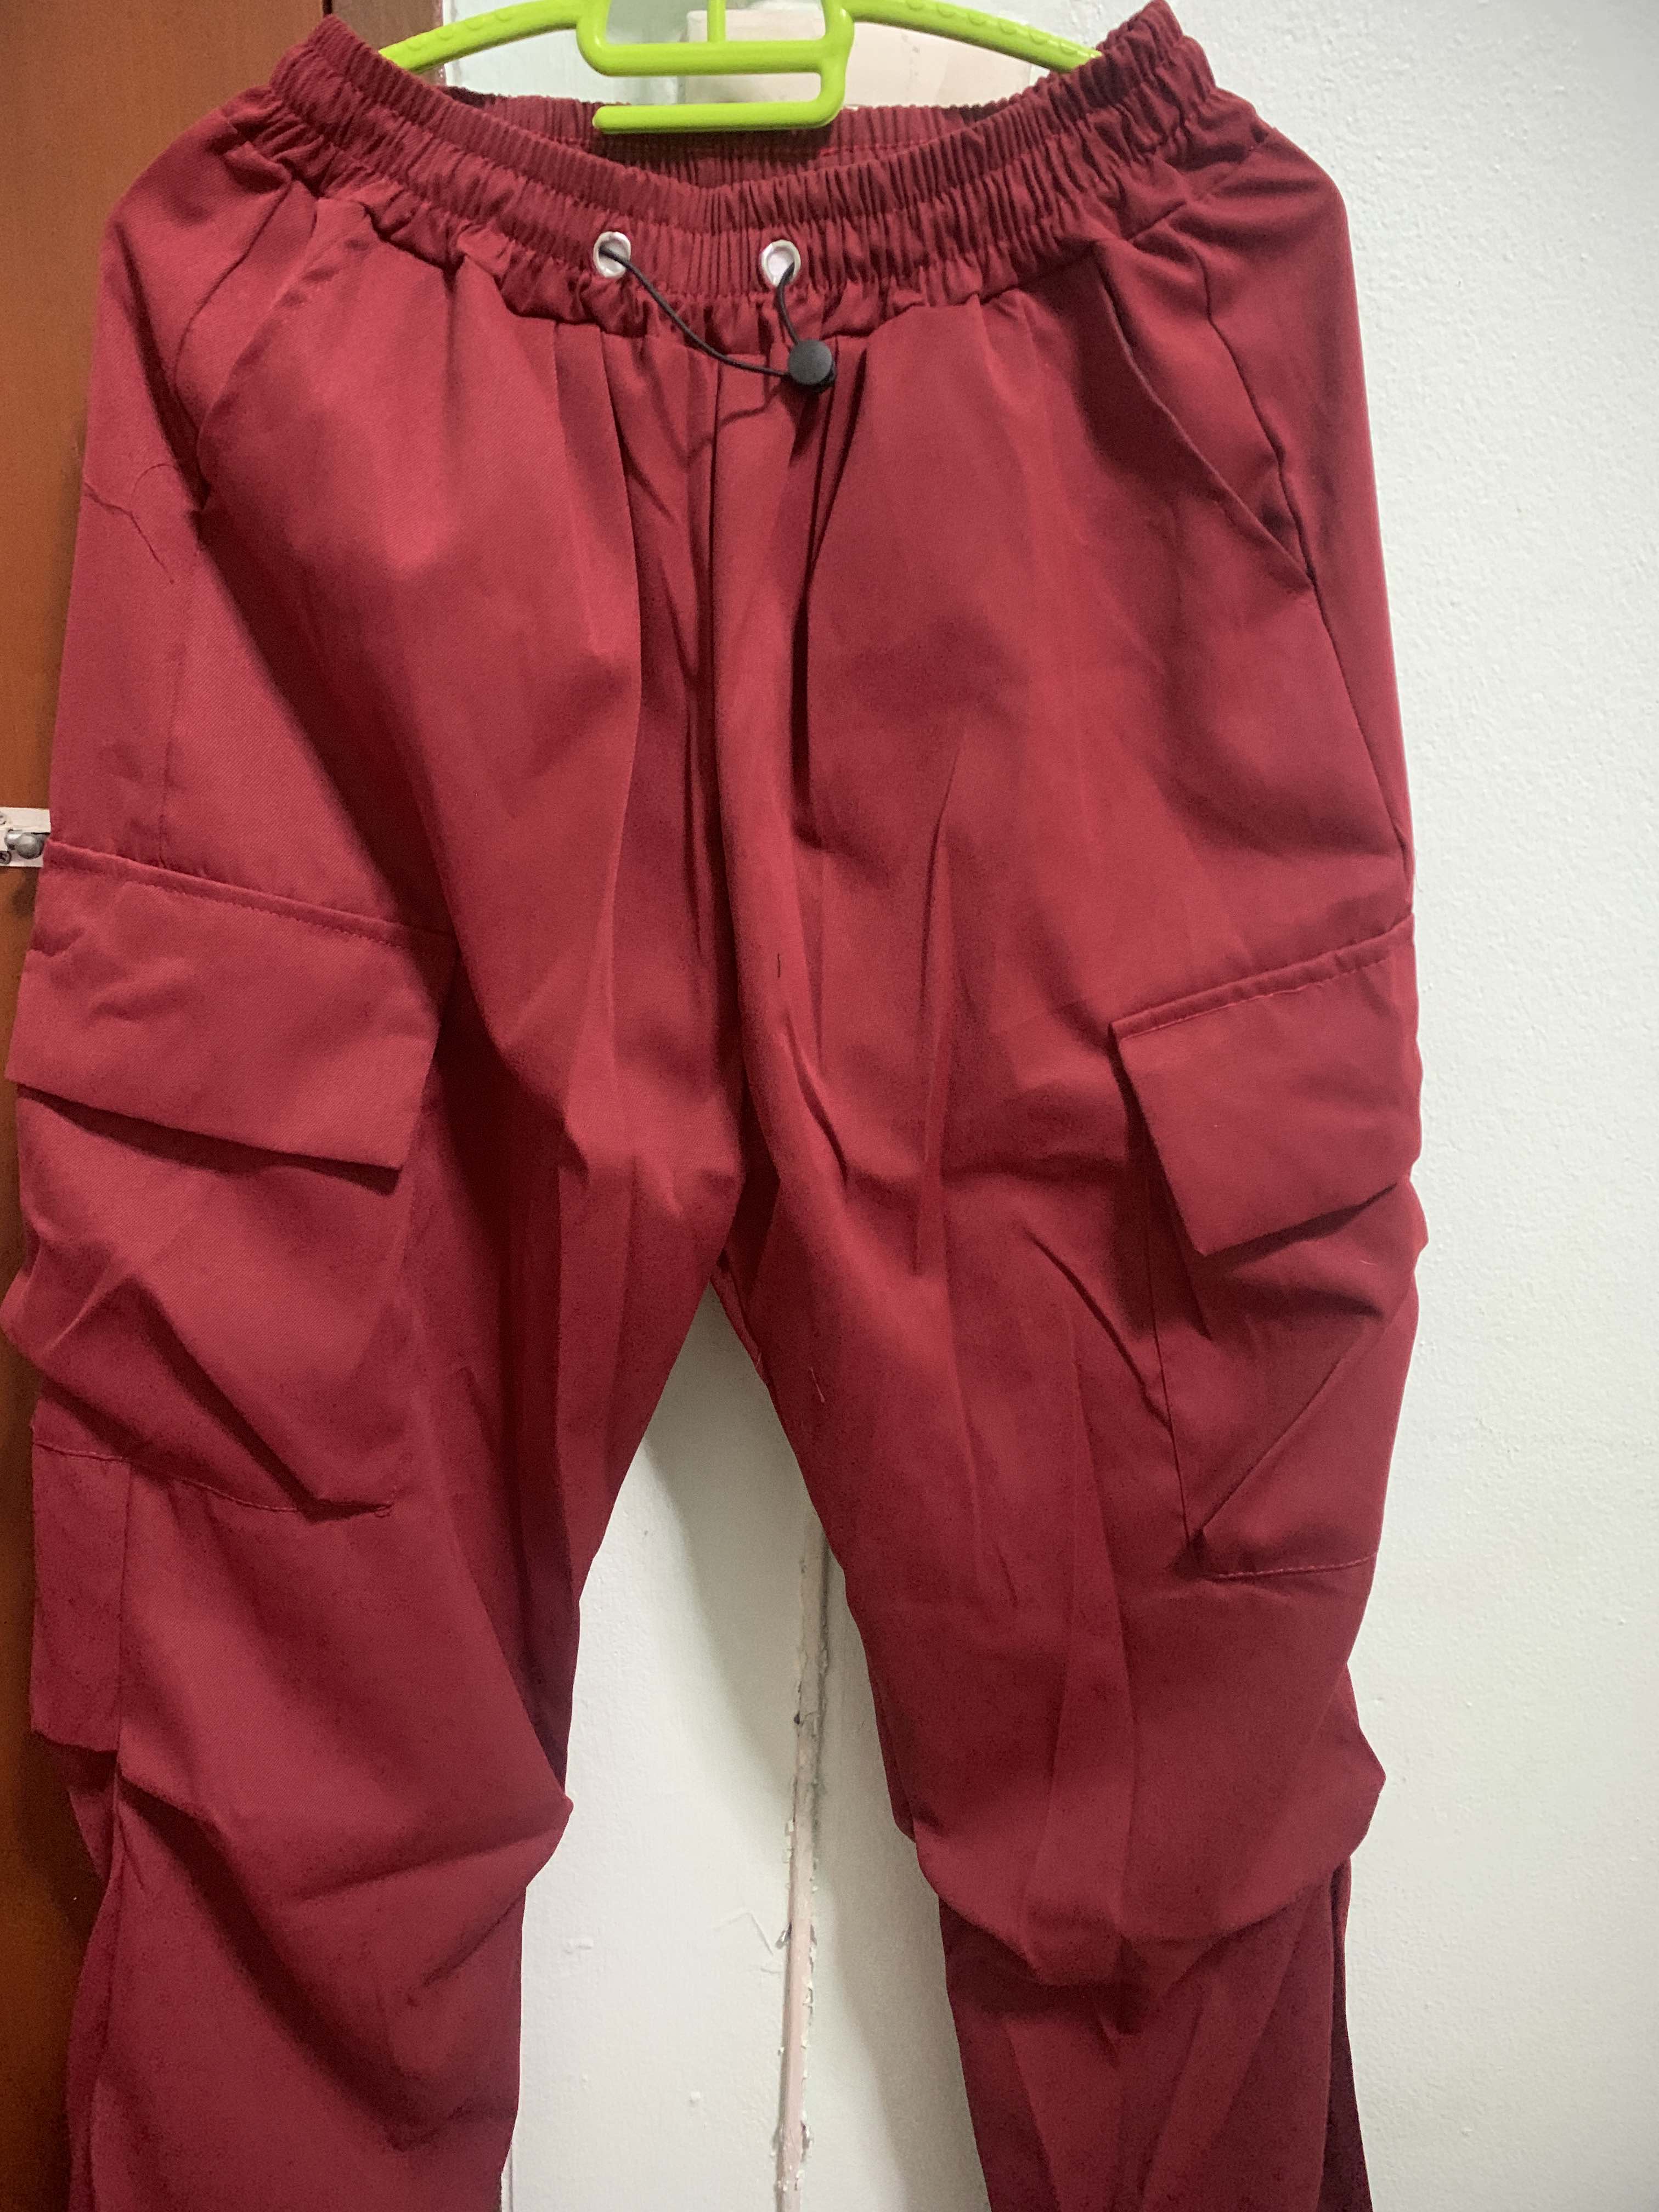 KASUTAM Women Vintage Red High Street Cargo Pants High Waist